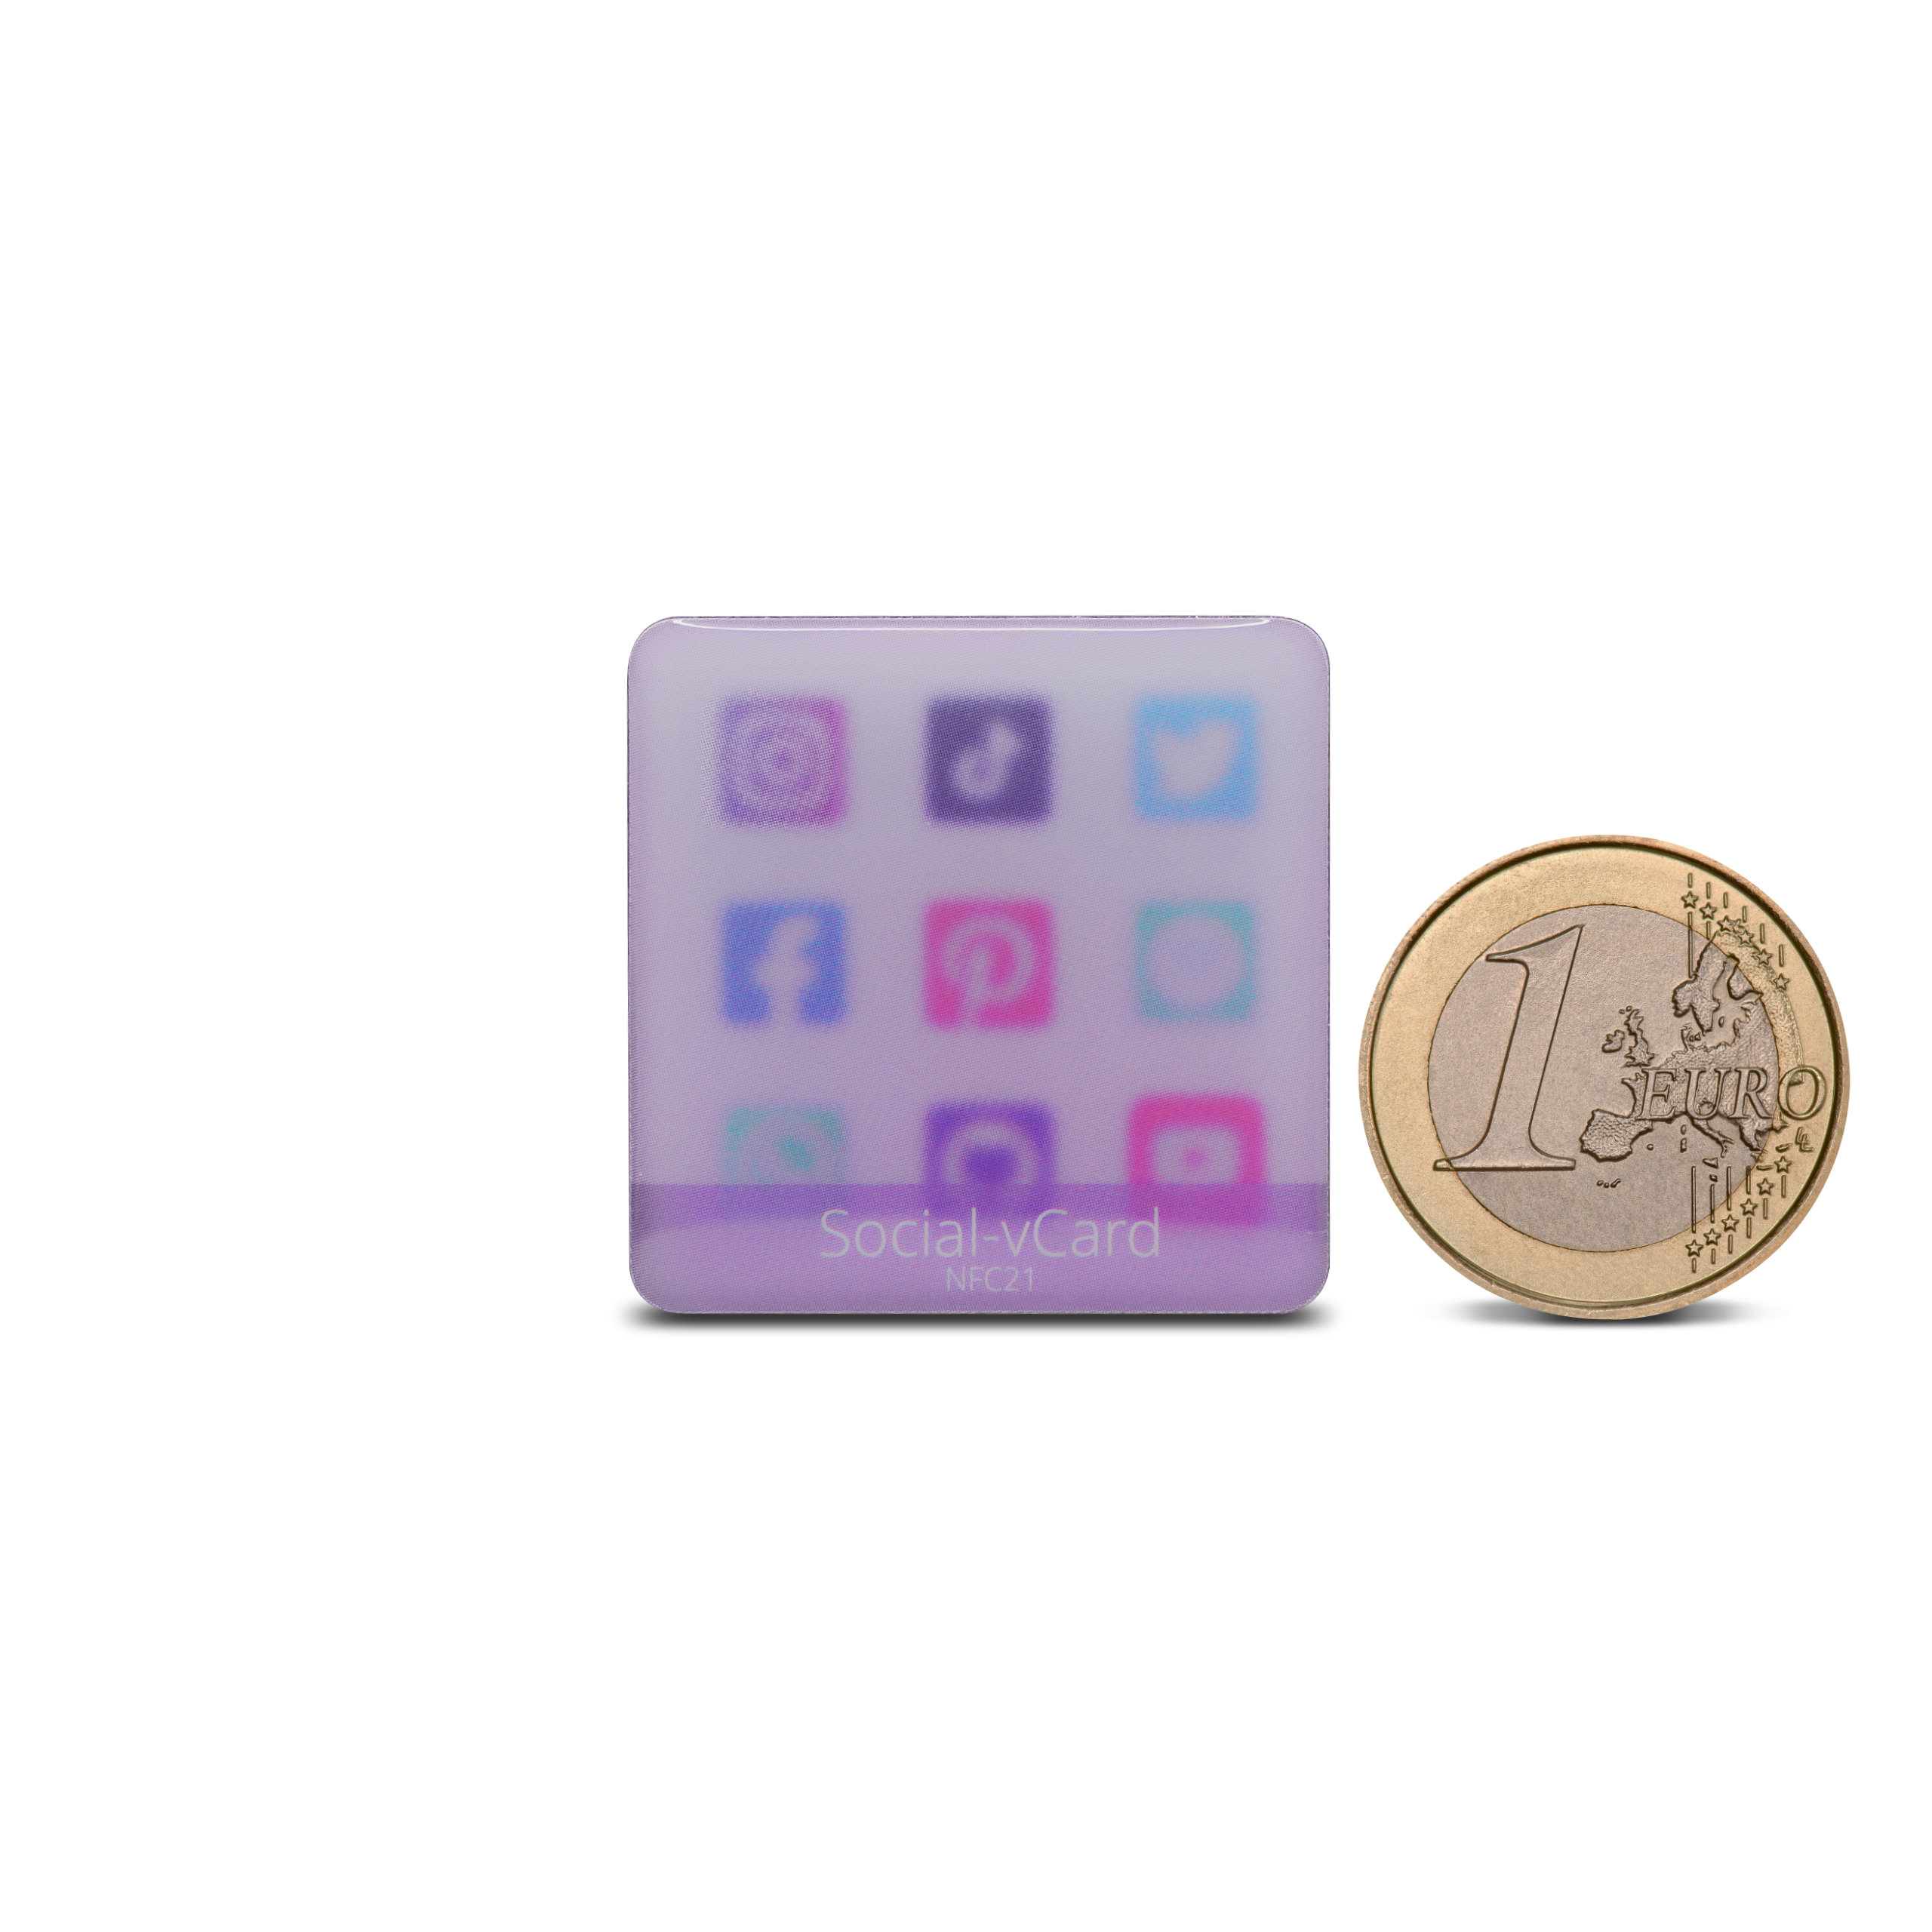 Social-vCard Glow - Digital social media sticker - PET - 35 x 35 mm - pink